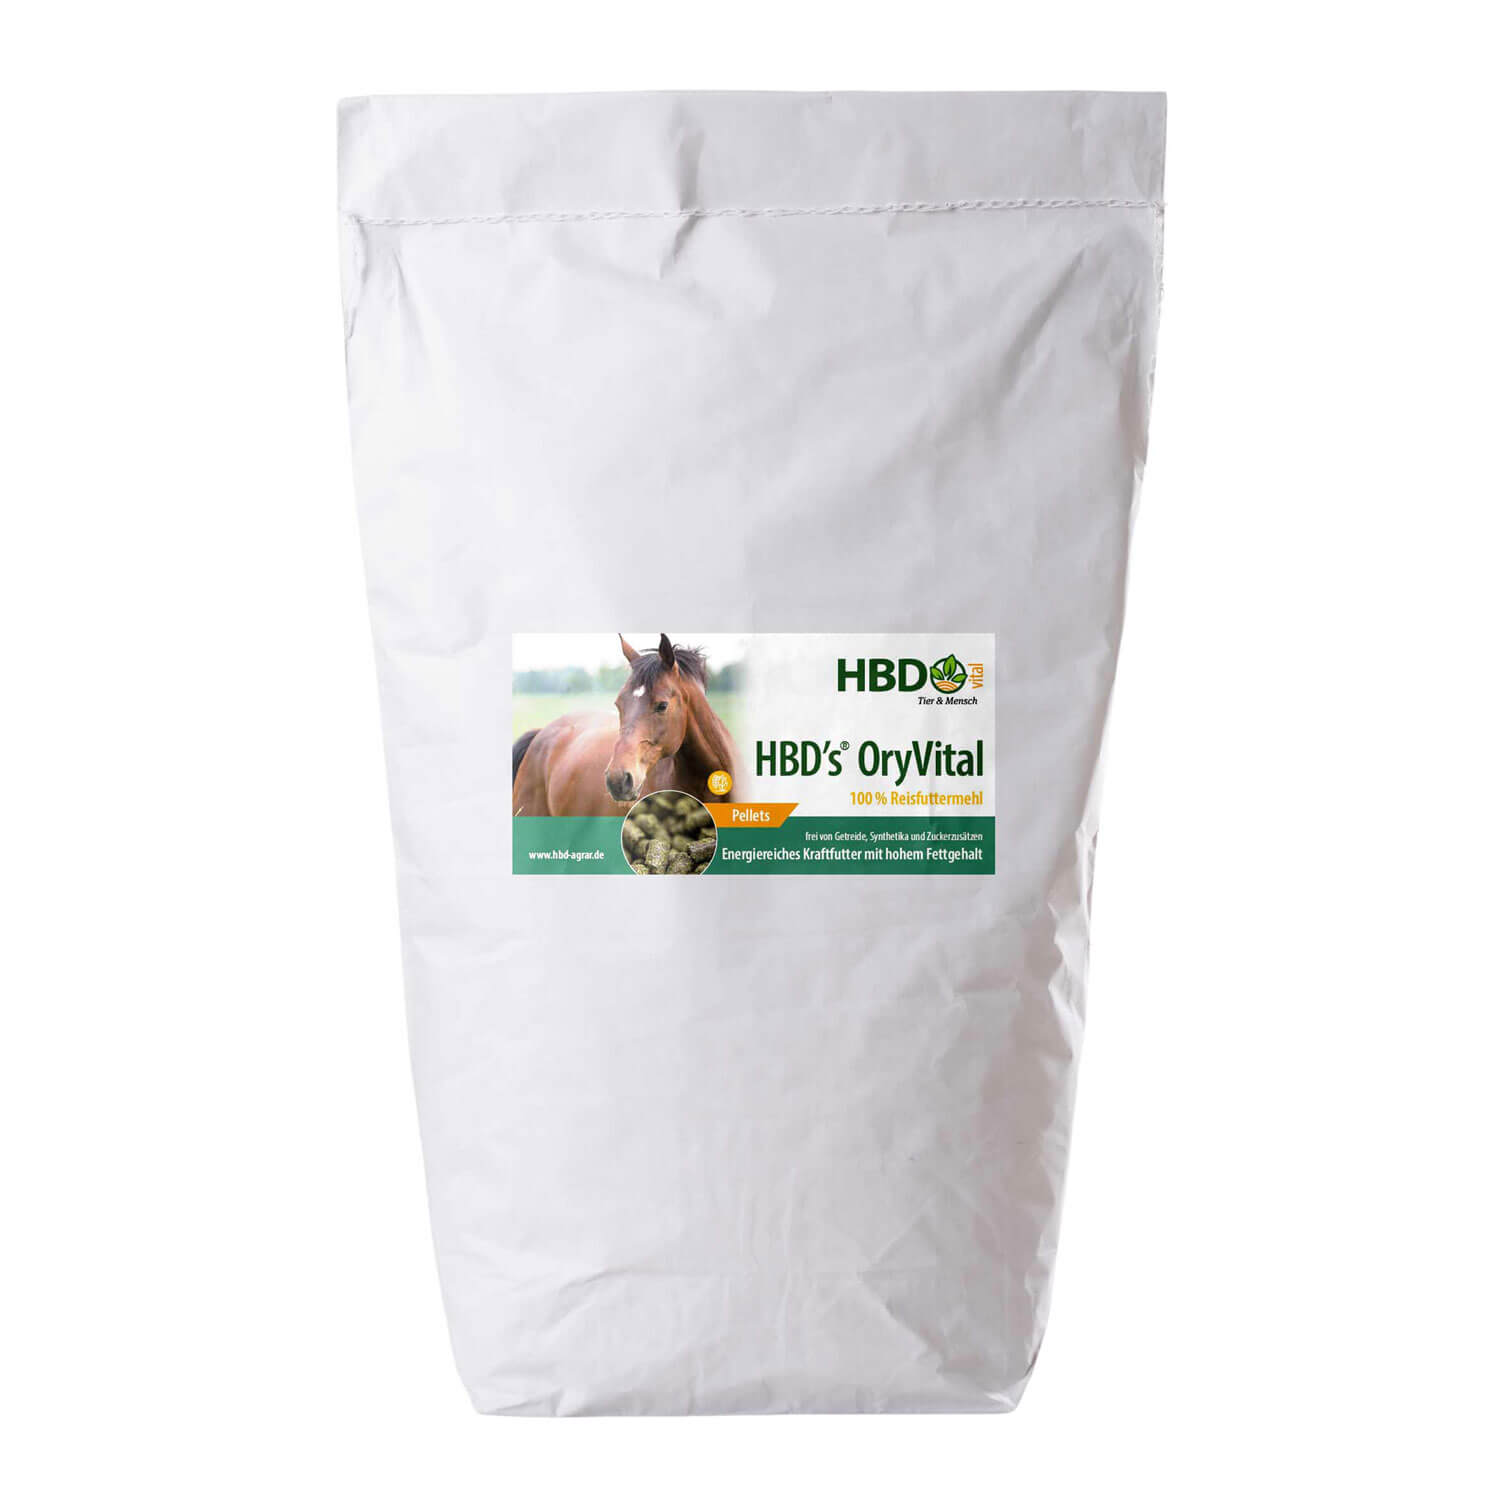 HBD-Agrar - HBD's® OryVital - pelletiertes, getreidefreies Ergänzungsmittel aus 100% Reisfuttermehl